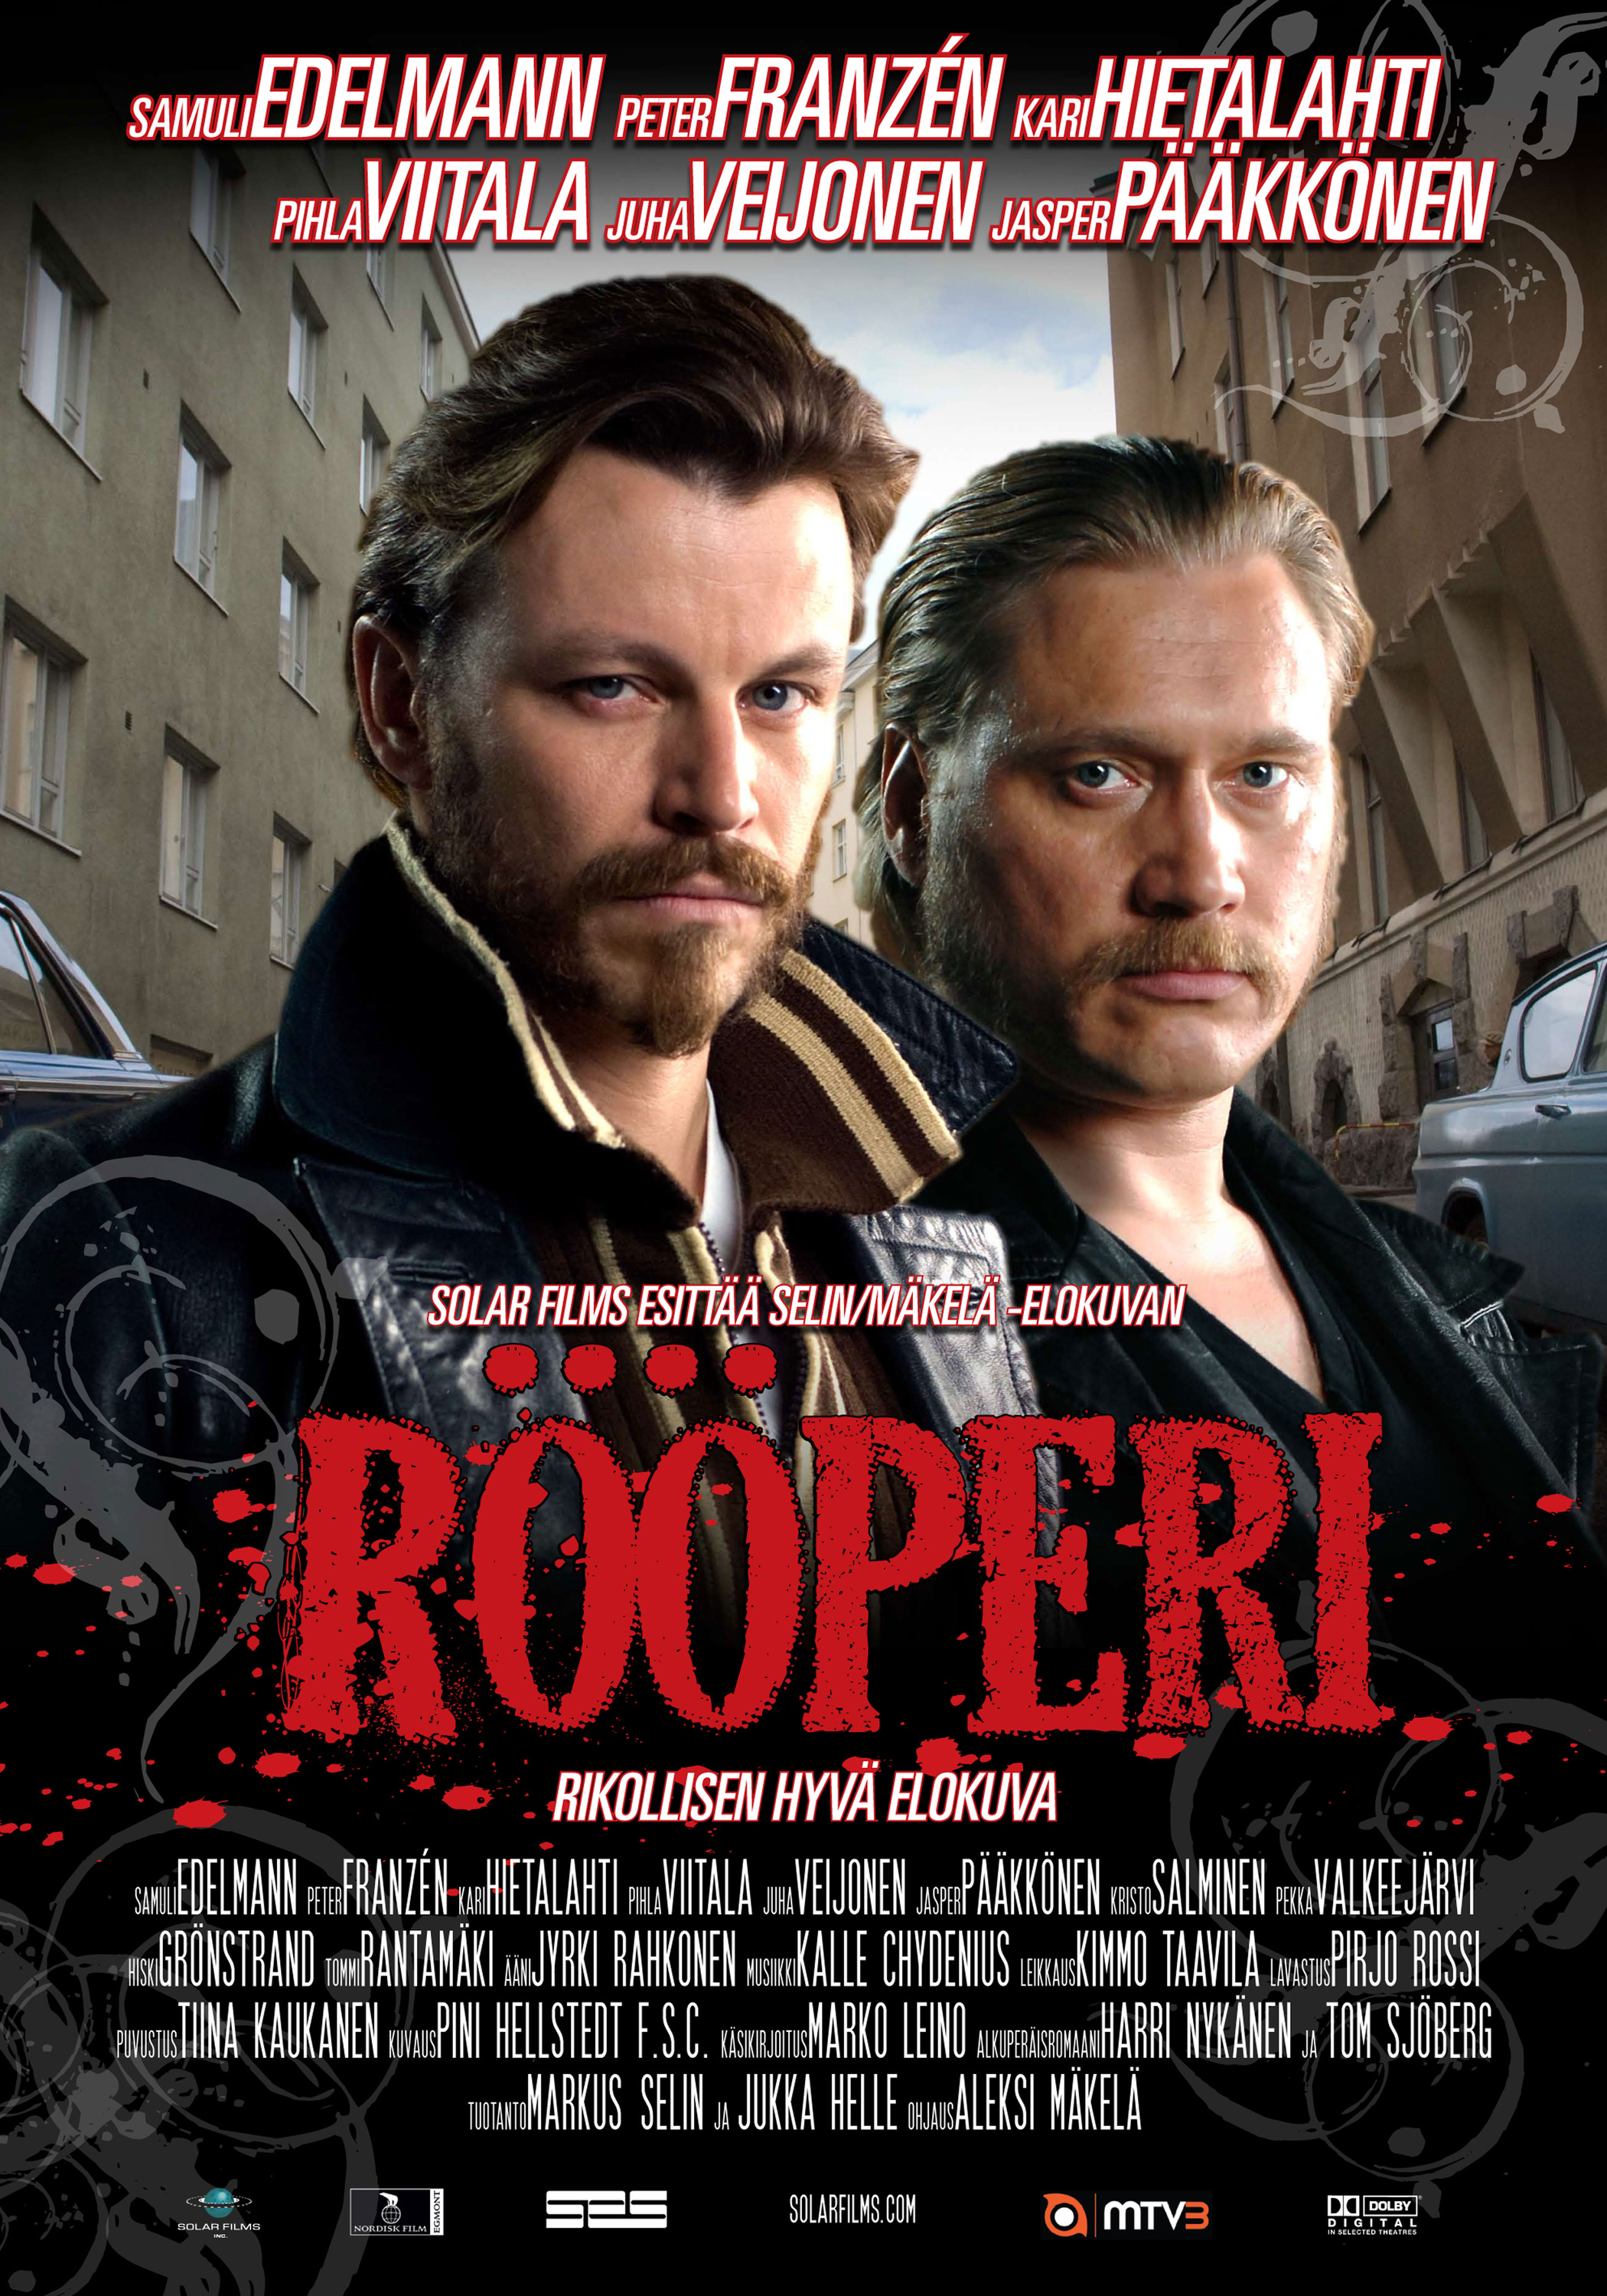 Mega Sized Movie Poster Image for Rööperi 